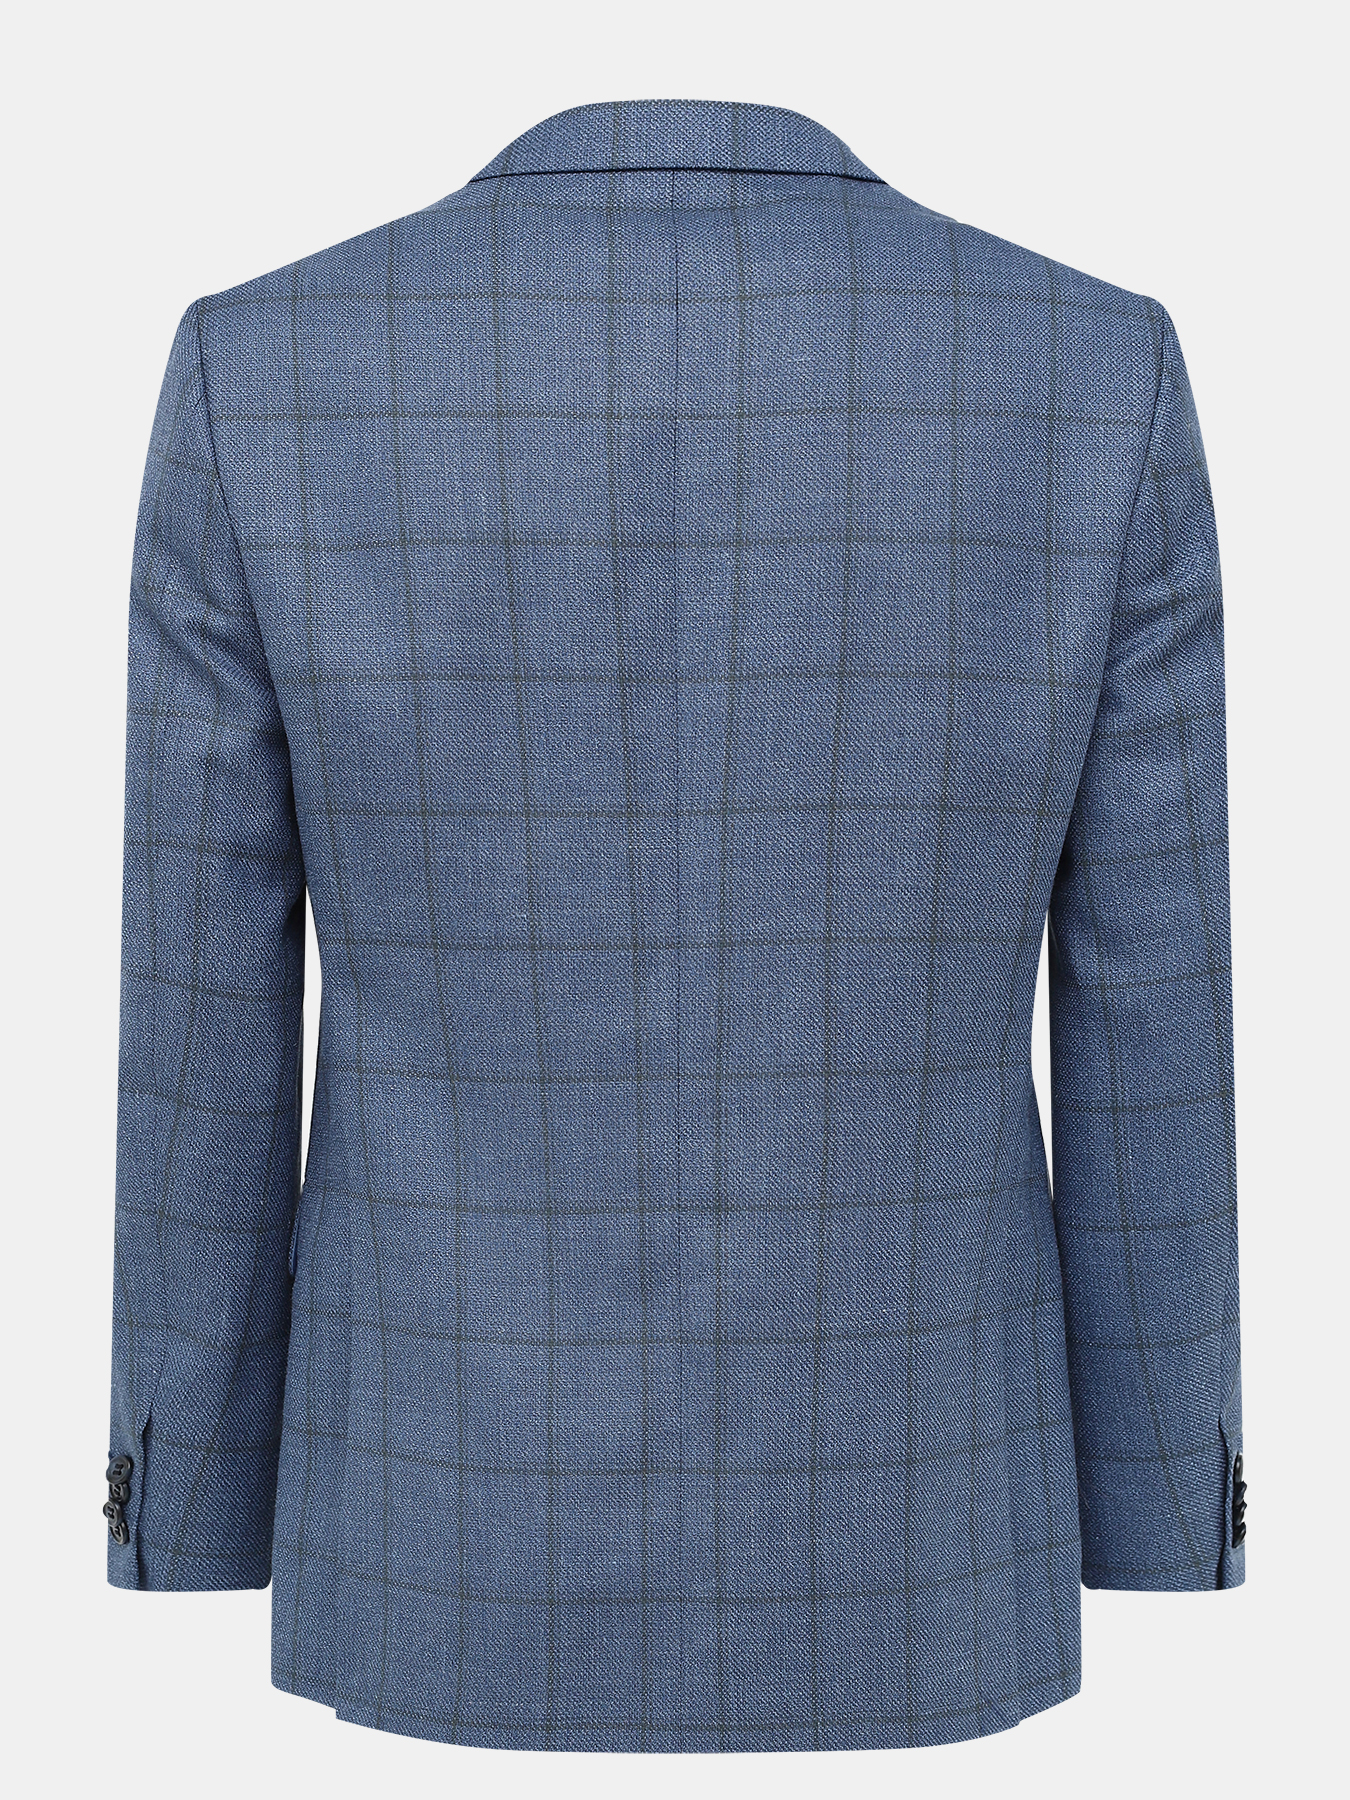 Пиджак Alessandro Manzoni 421118-390, цвет синий, размер 62 - фото 4